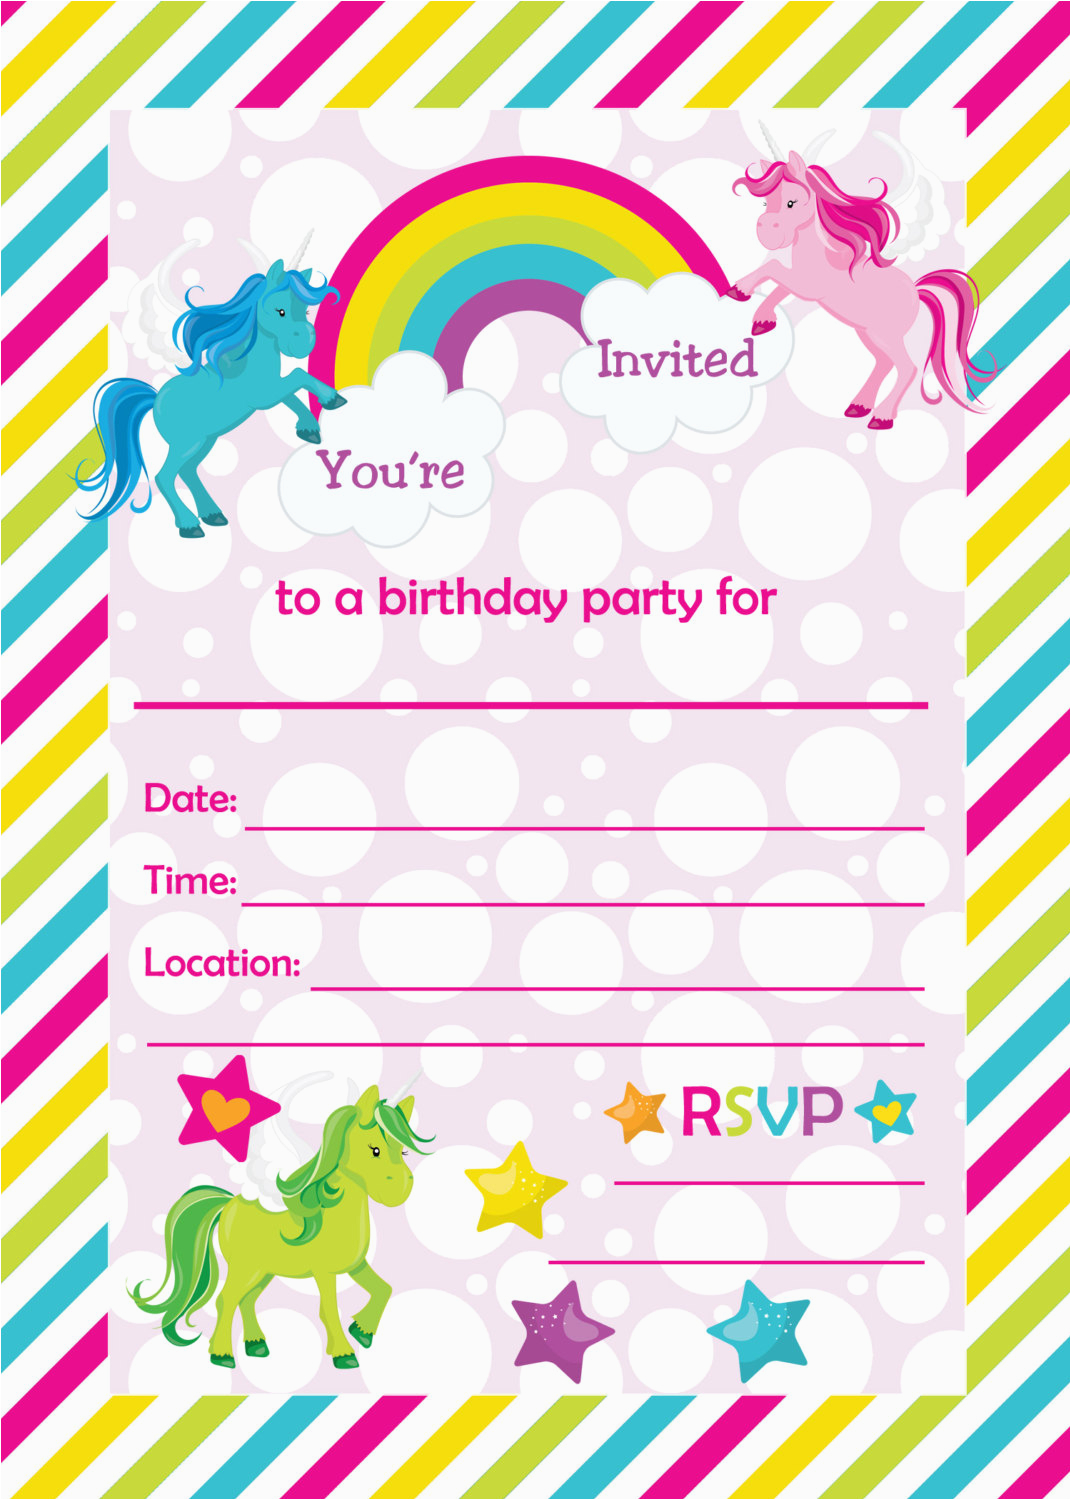 blank-birthday-invitations-to-print-fill-in-birthday-party-invitations